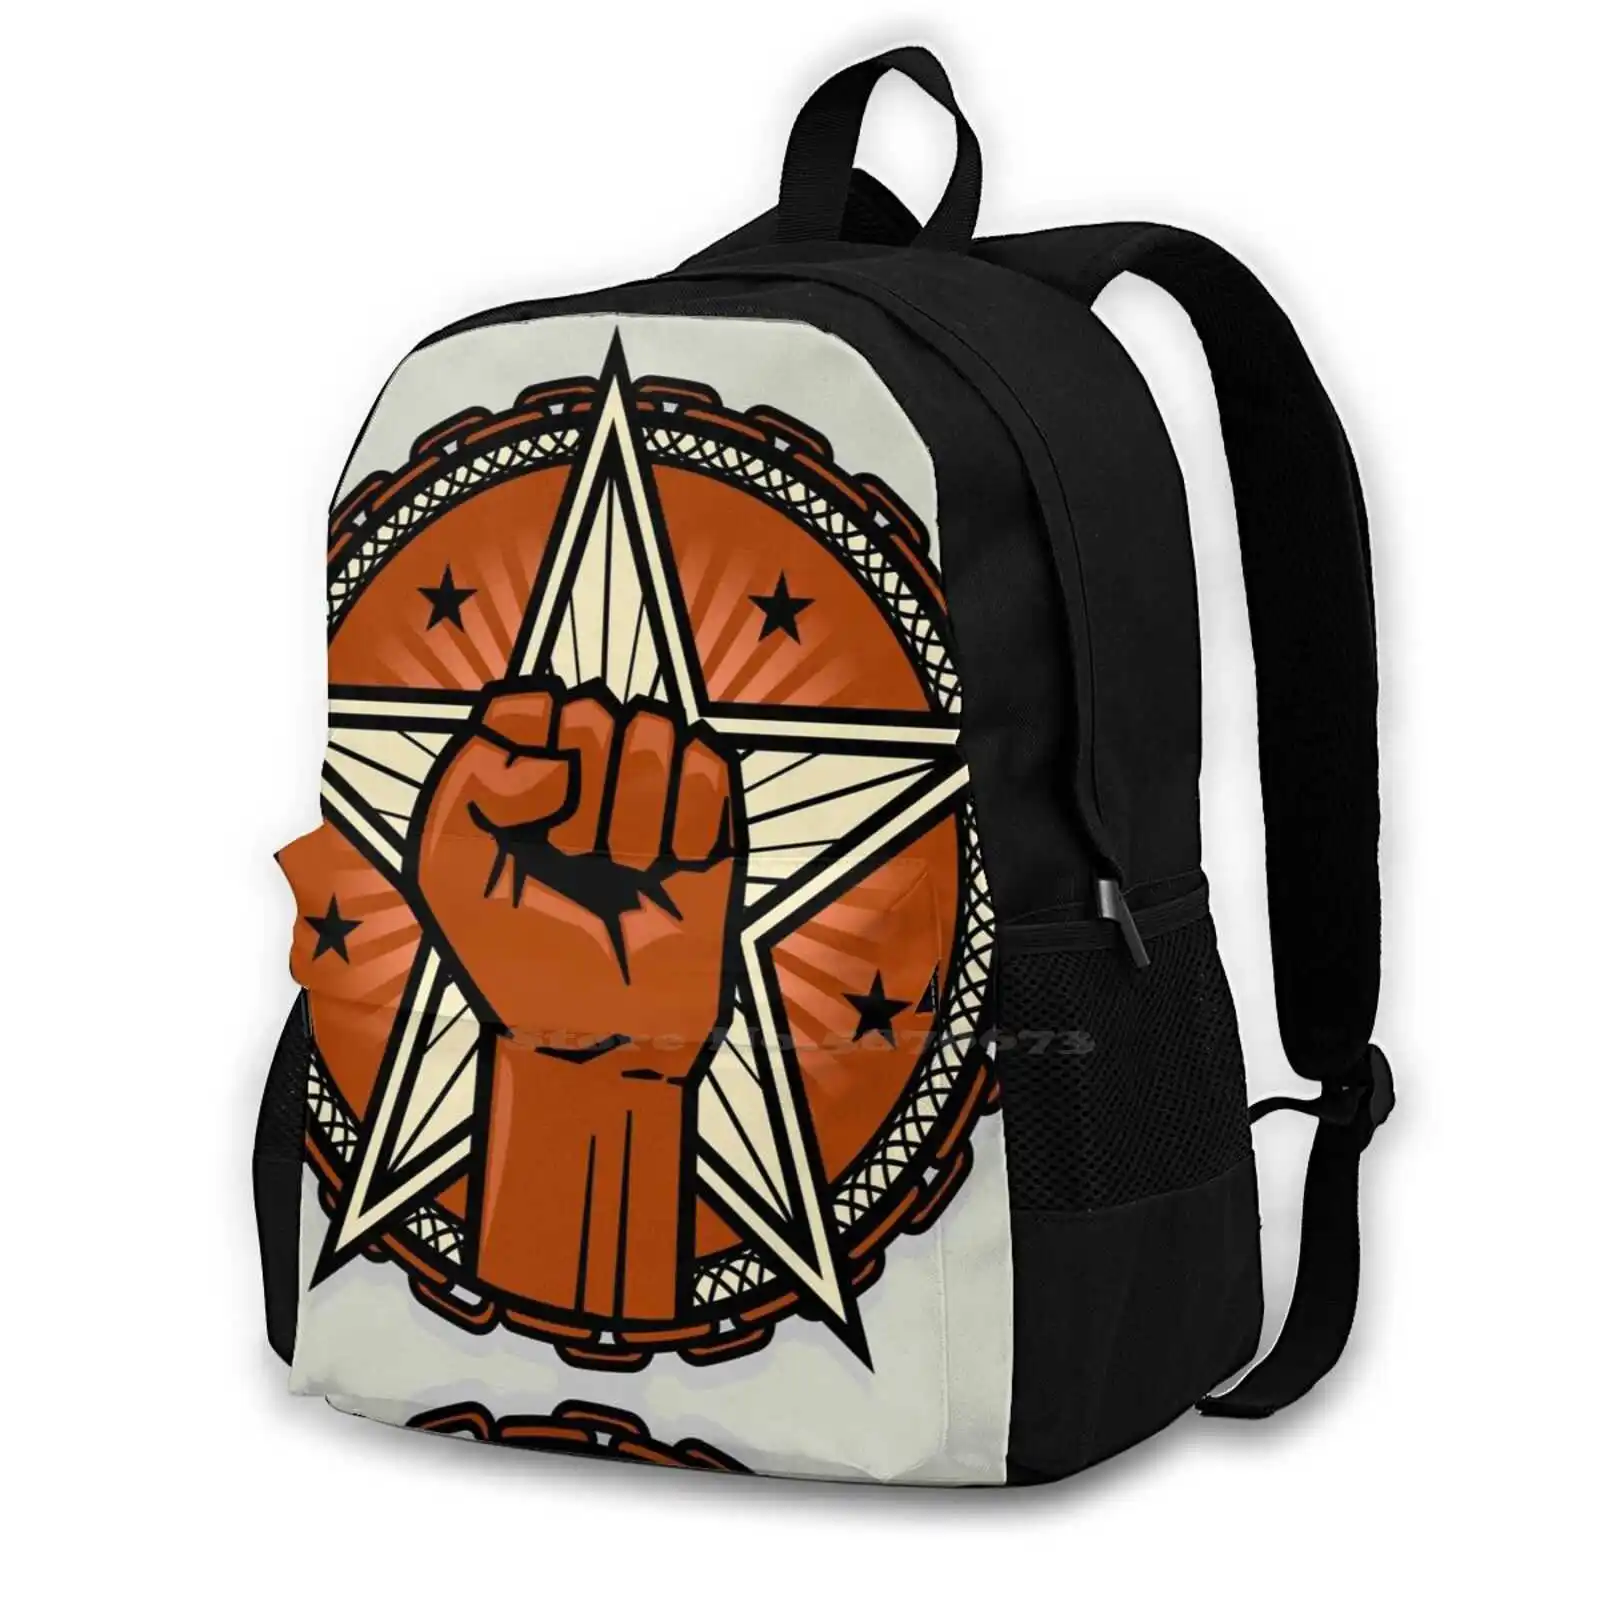 

Resist Emblem - The Hand Of Revolution Women Men Teens Laptop Travel School Bags Resist Resistance Activism Uncle Sam Non